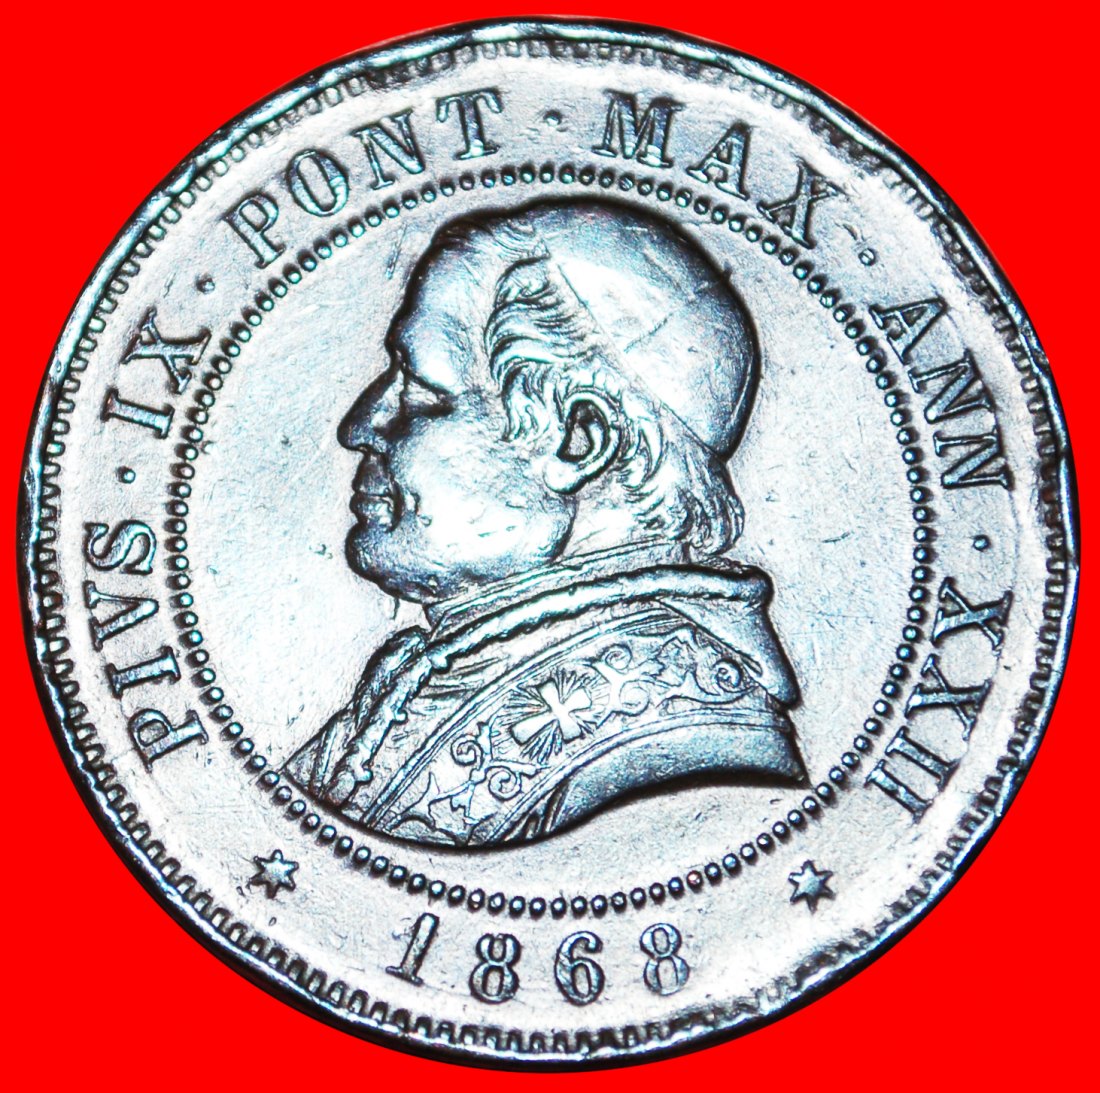  • PIUS IX. (1846-1870): ITALIEN ★ KIRCHENSTAAT 4 SOLDI 20 CENTESIMI XXII 1868R! OHNE VORBEHALT!   